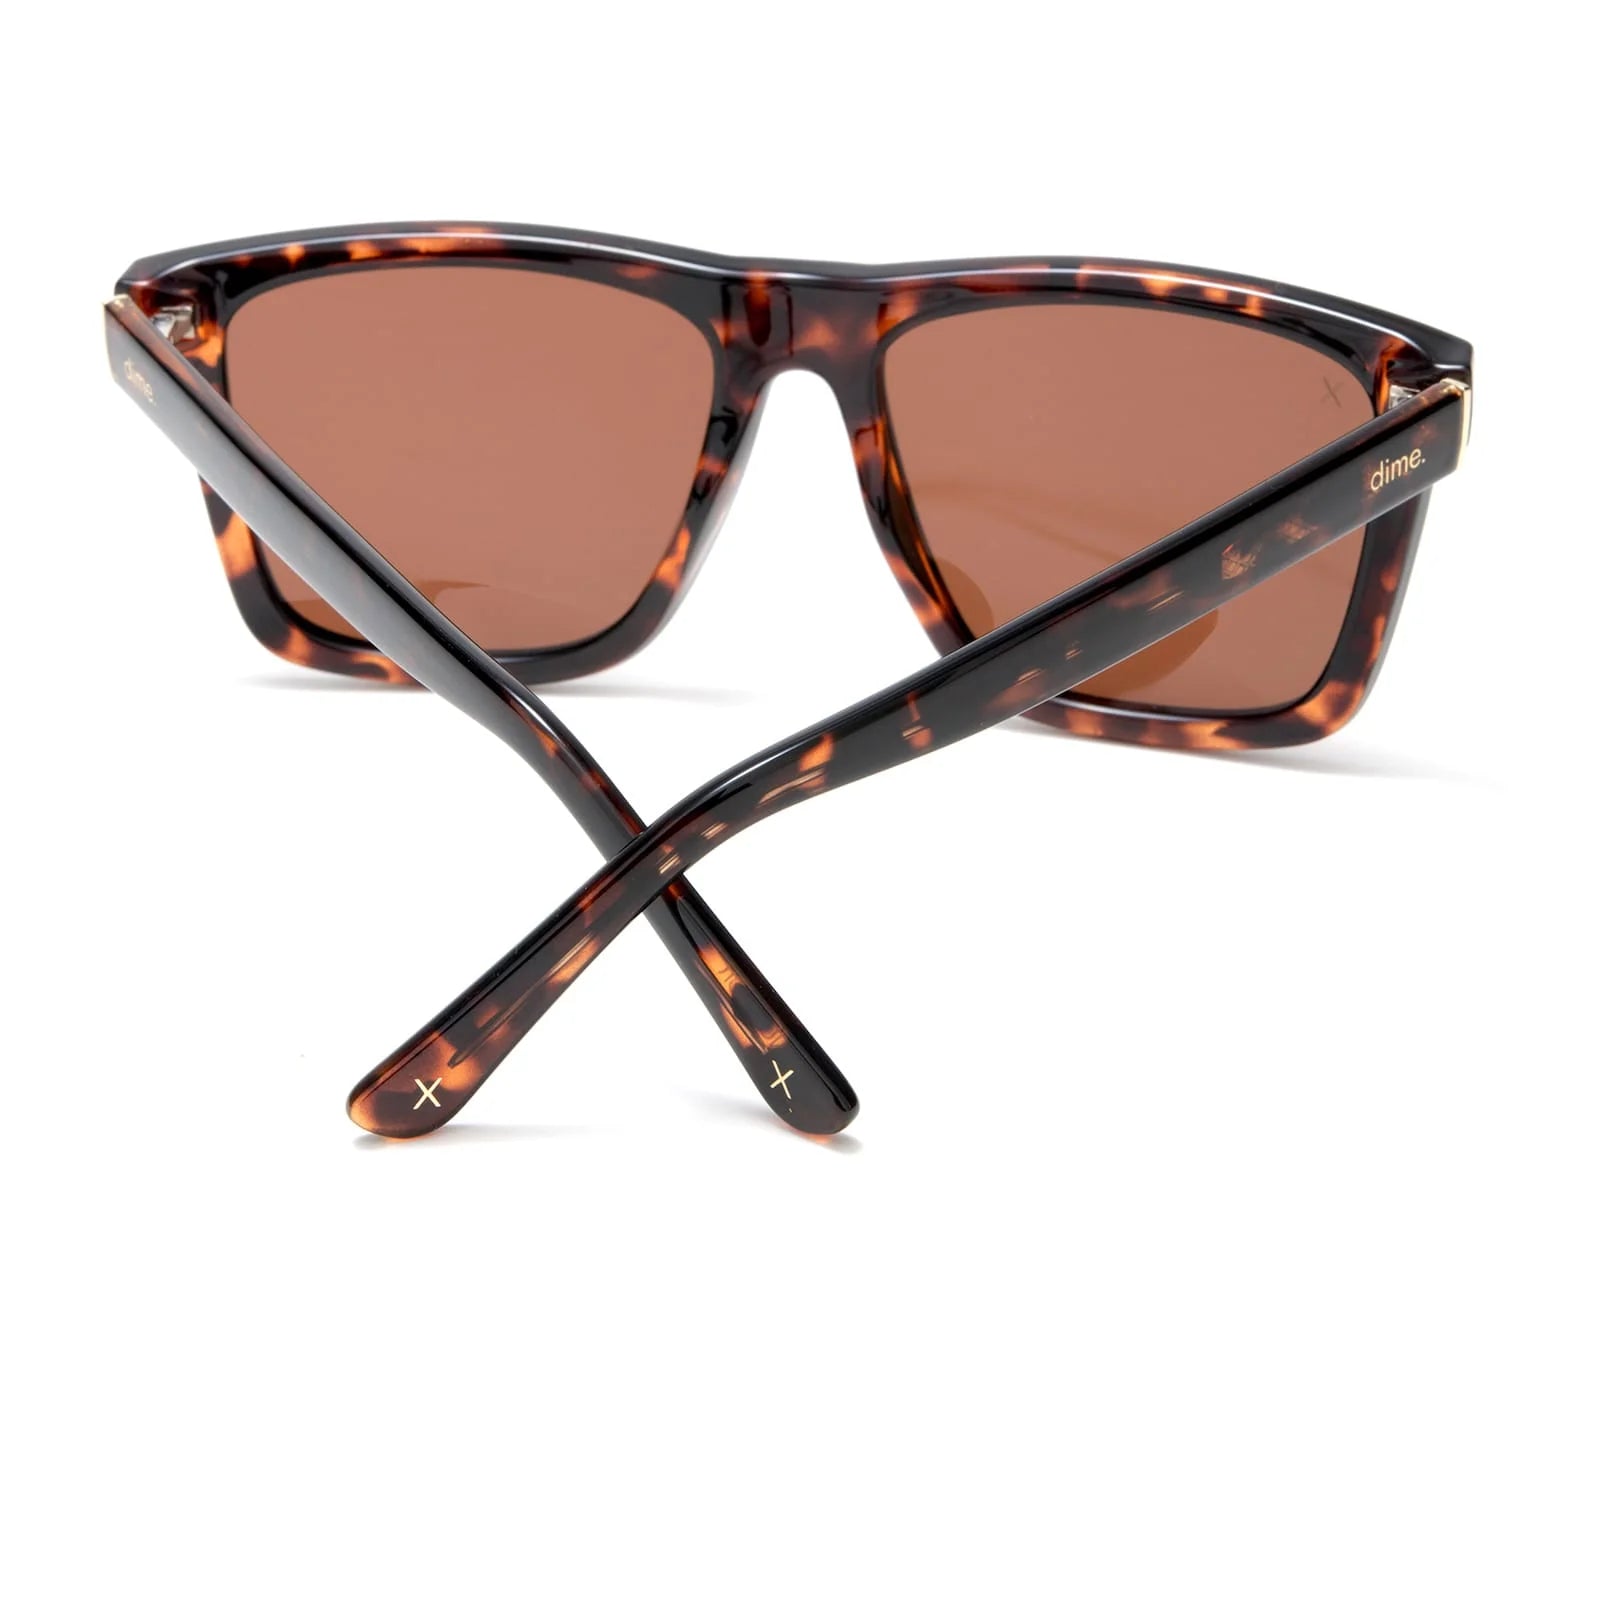 Hangback tortoise brown polarized sunglasses